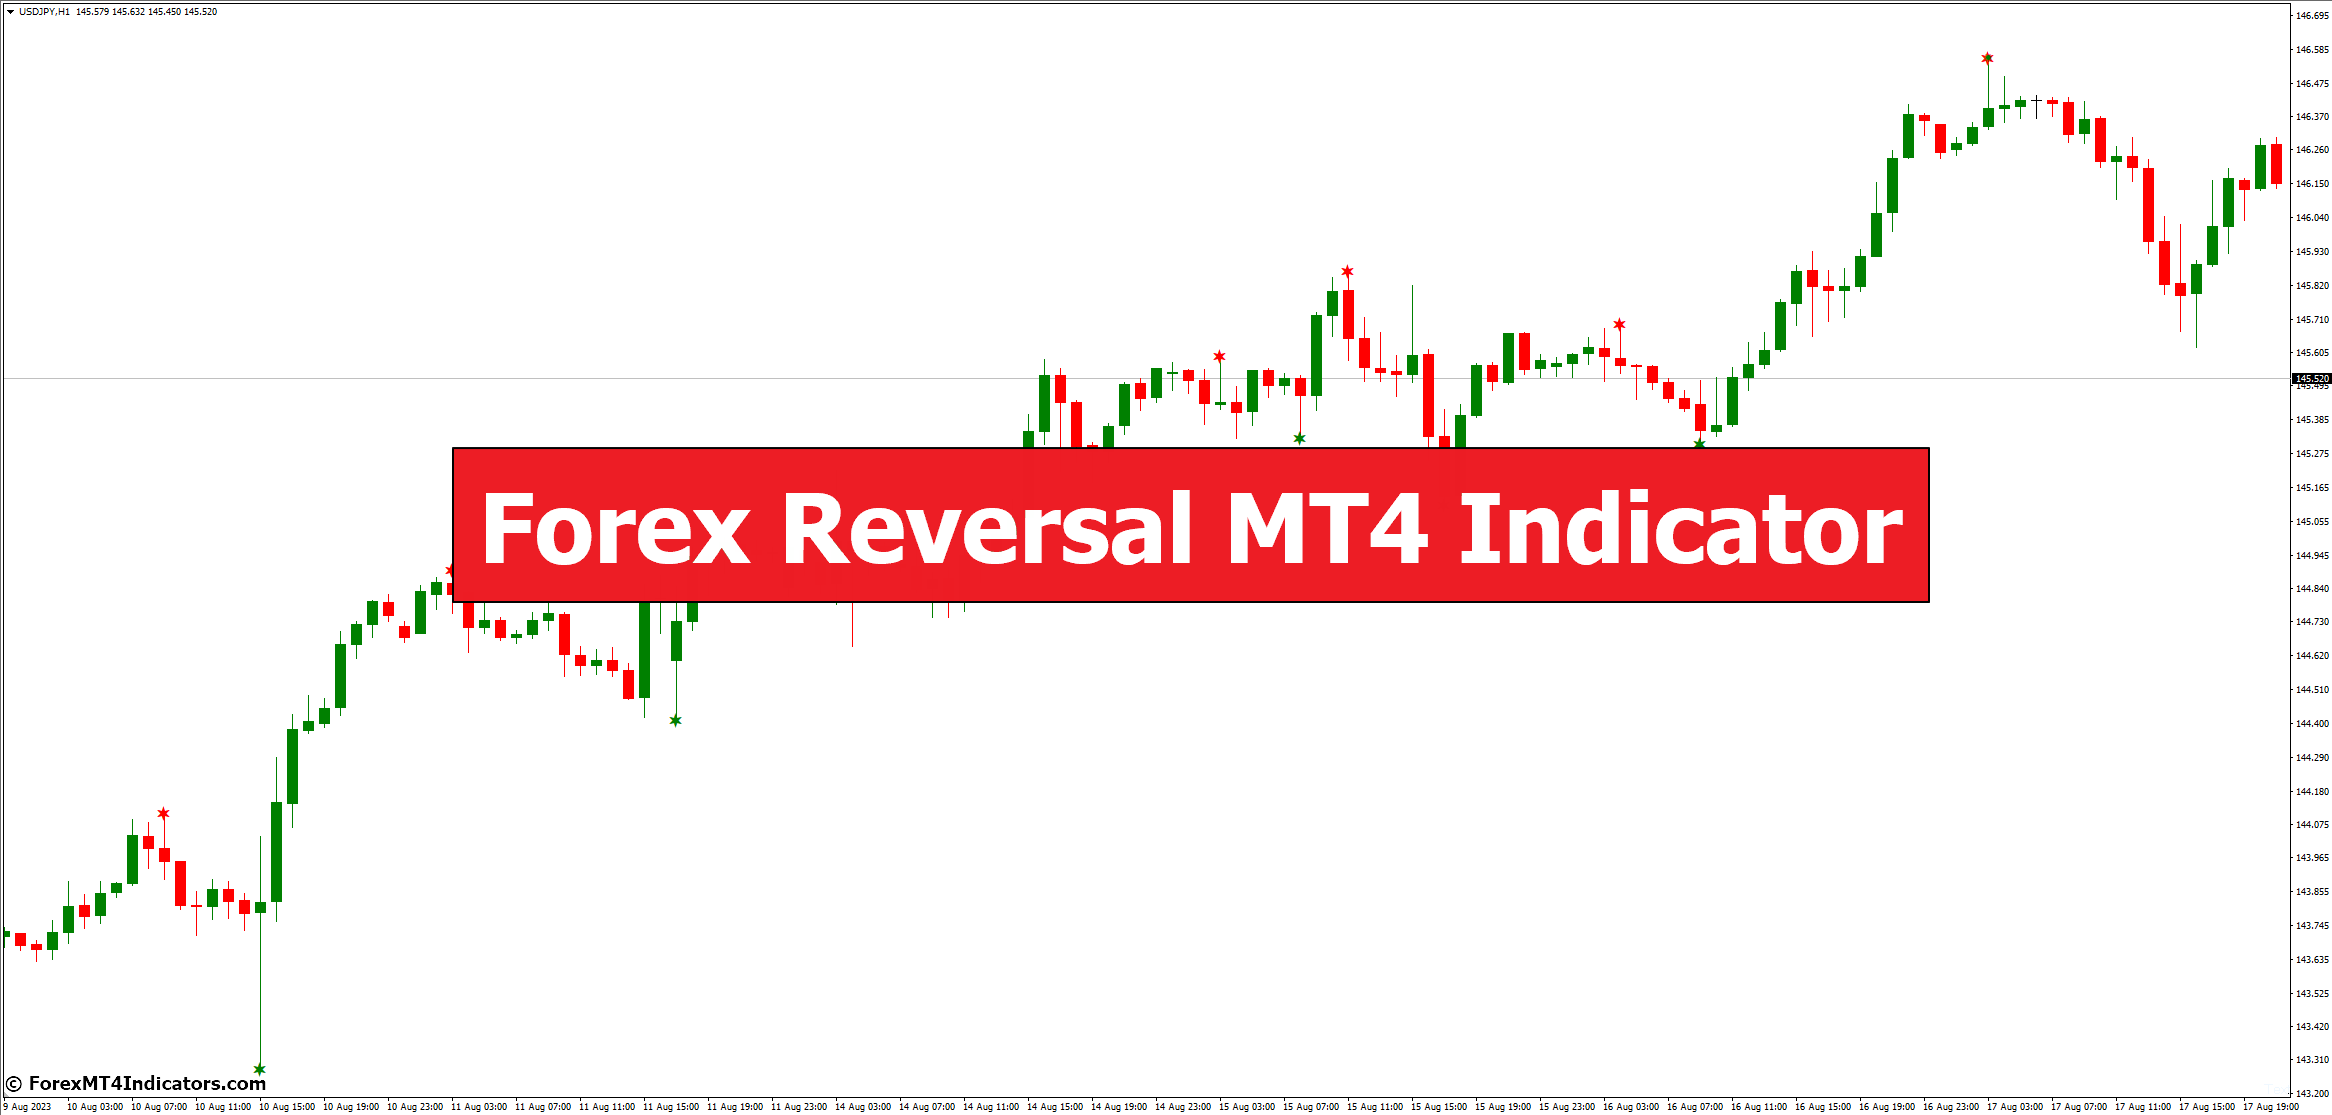 Forex Reversal MT4 Indicator